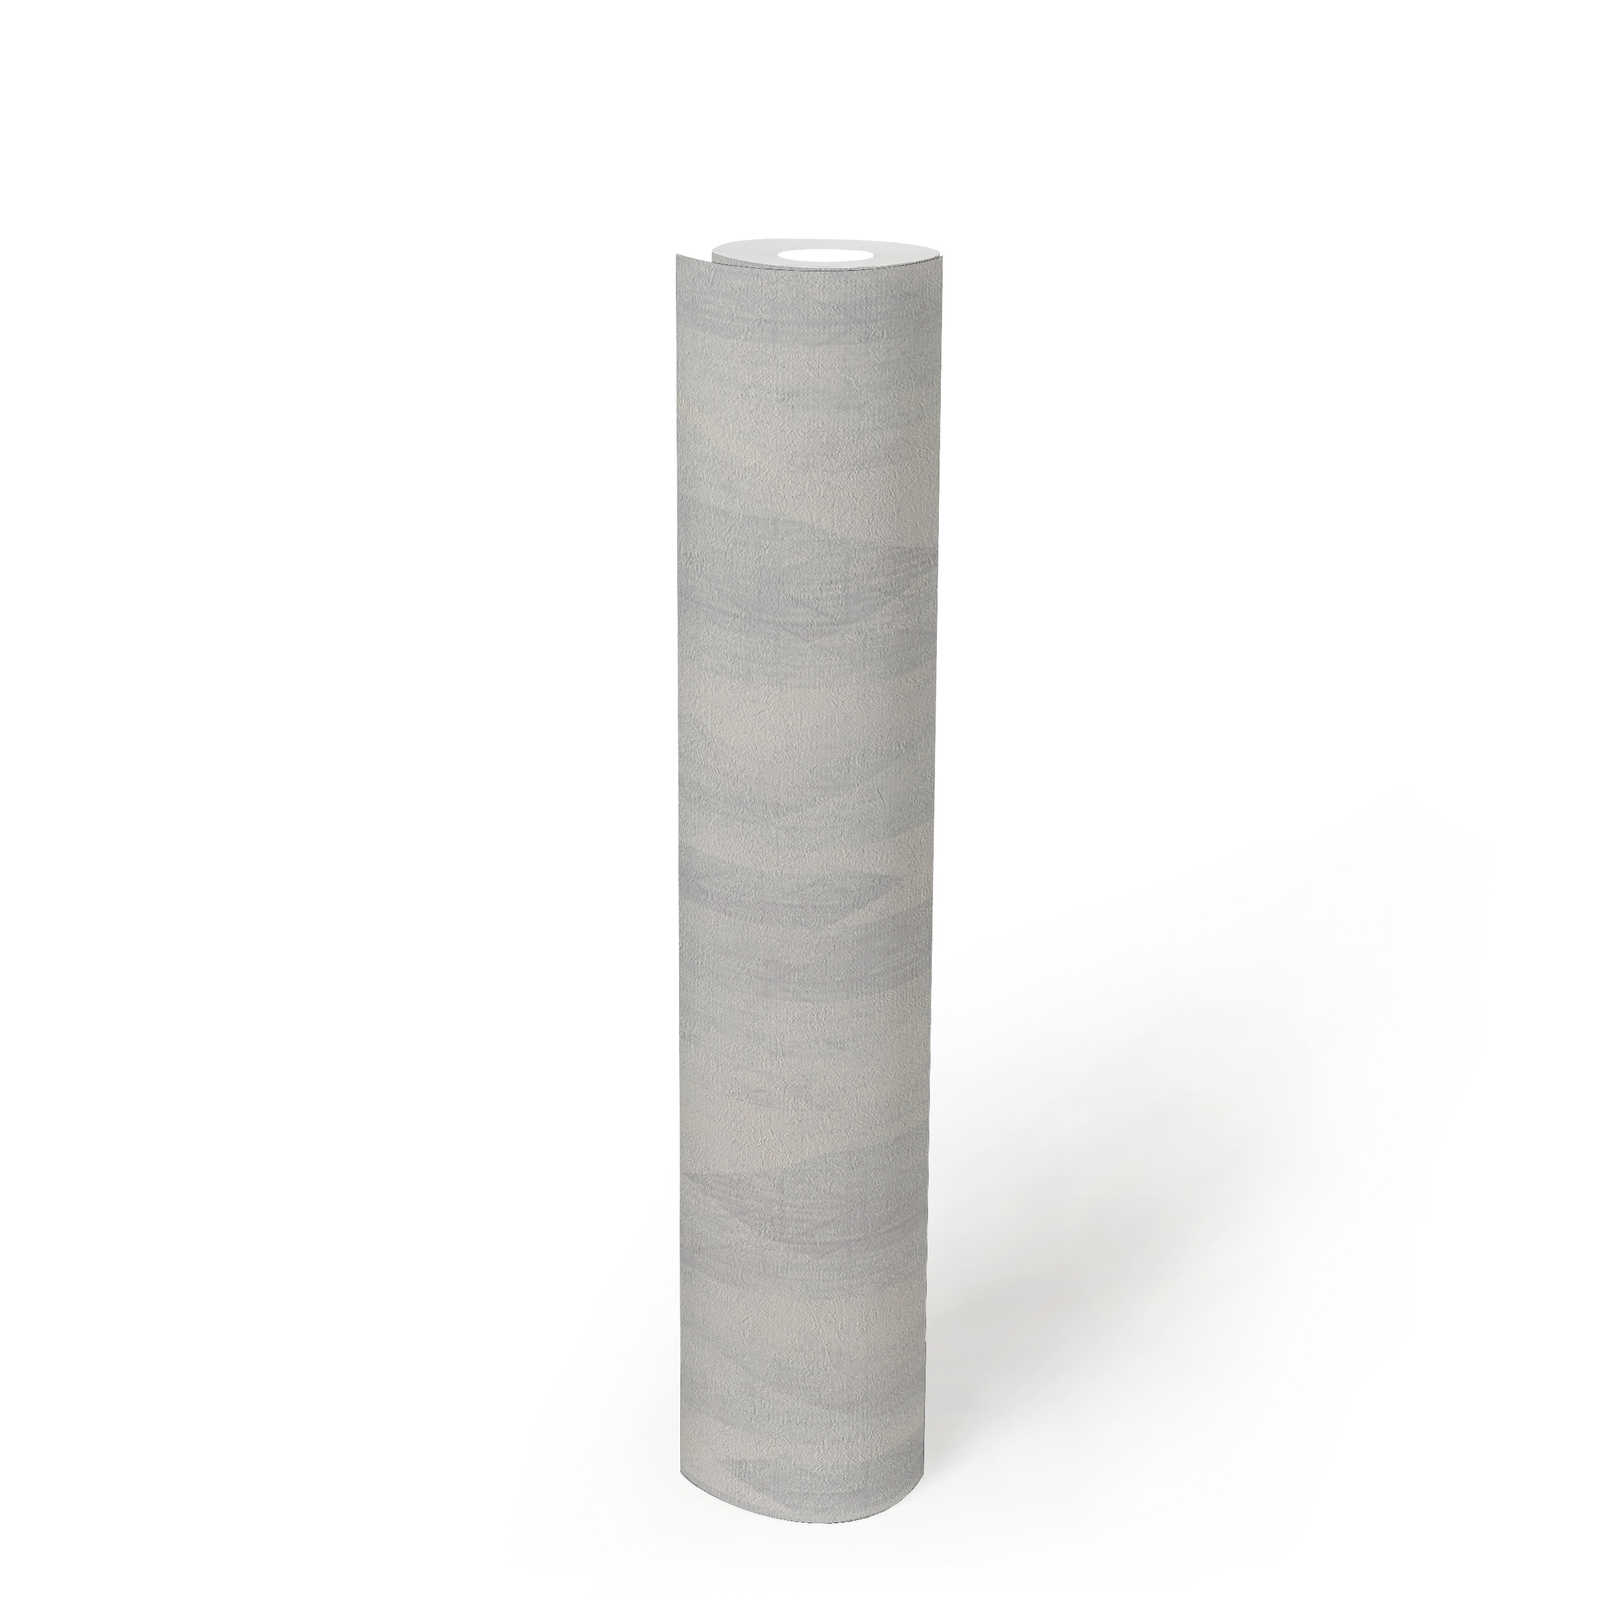             Papel pintado tejido-no tejido con sutiles rombos - gris, blanco
        